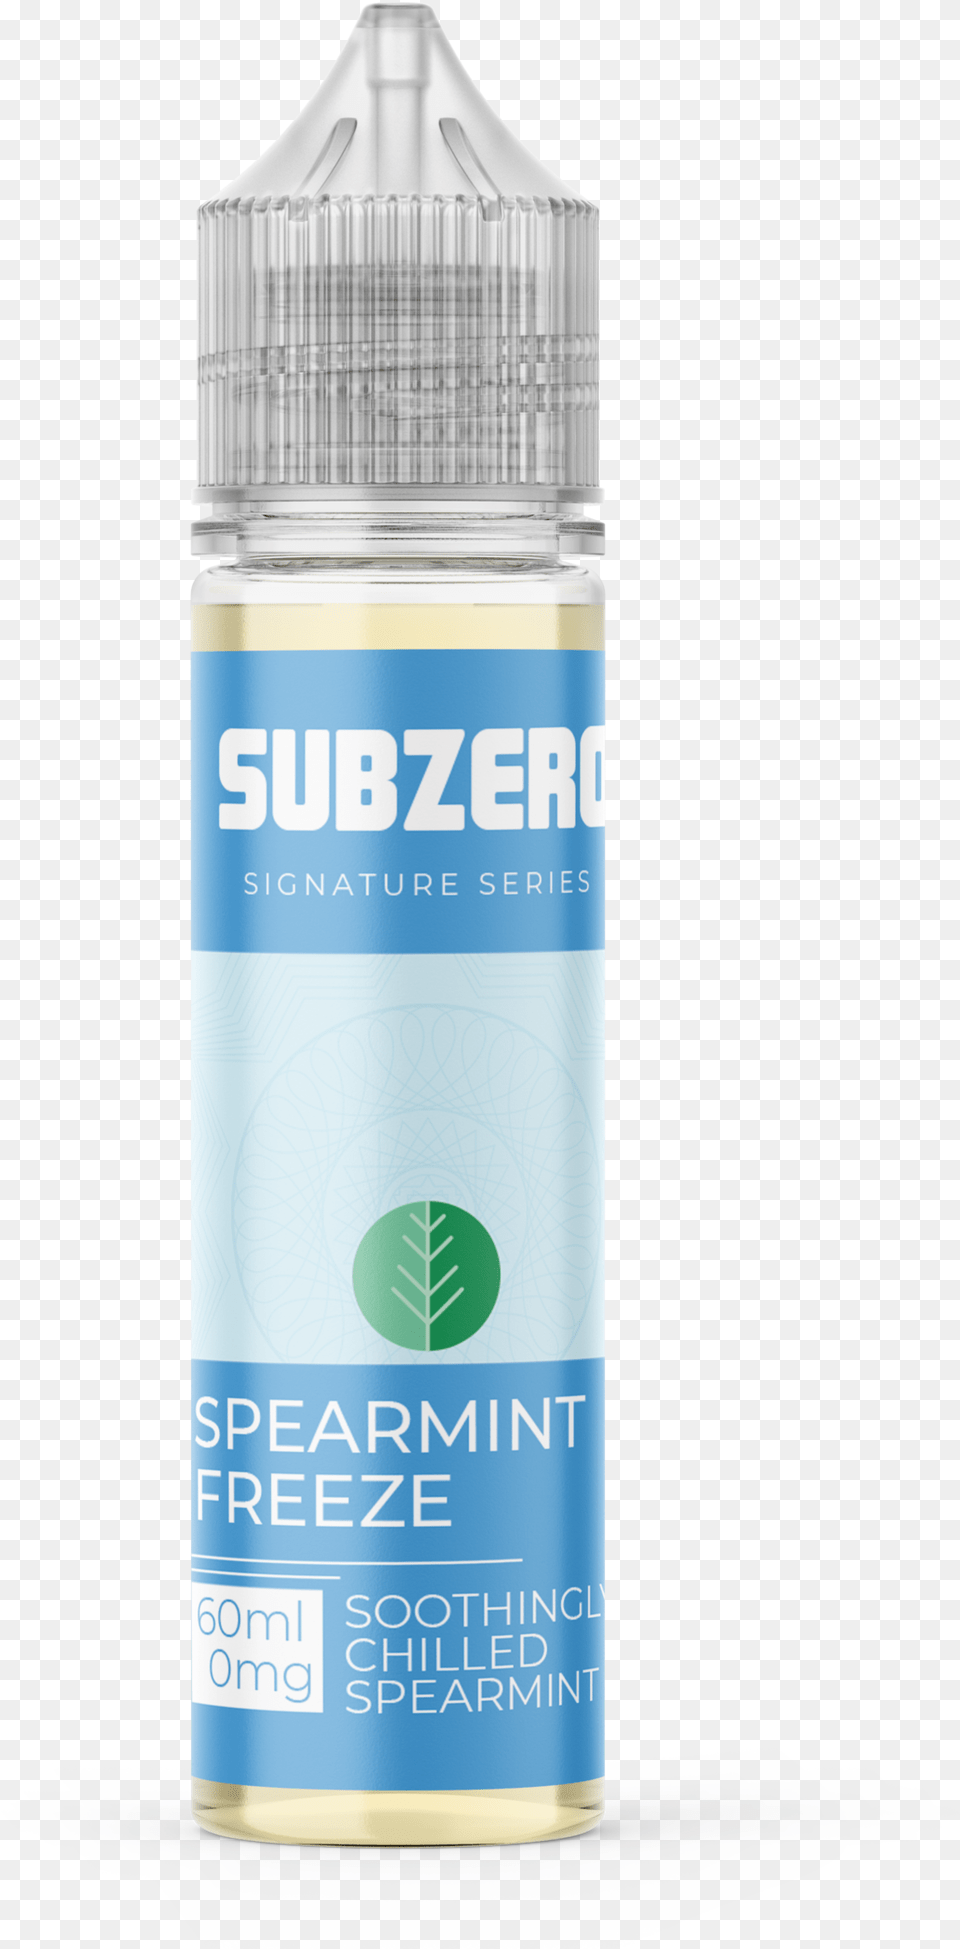 Signature Series Subzero Spearmint Freeze Menthol, Can, Tin, Cosmetics, Bottle Png